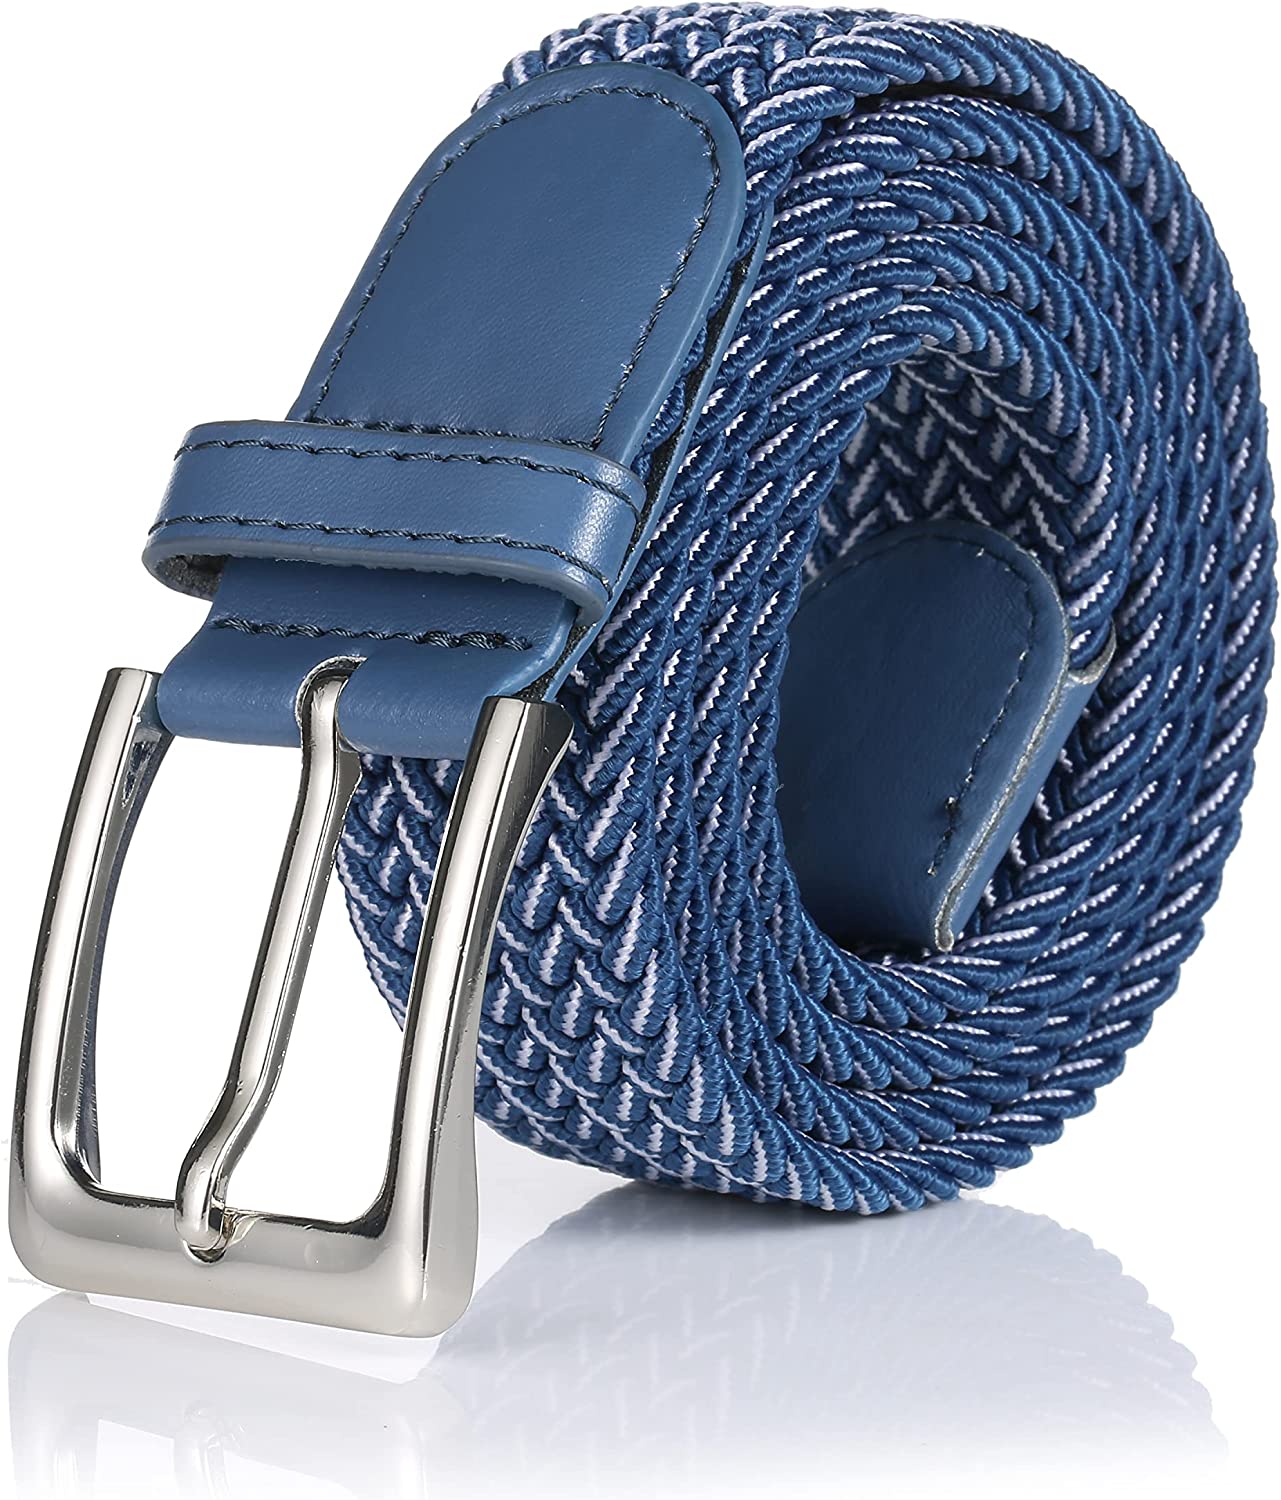  BSLLNEK Elastic Braided Belt, 1 3/8, Woven Stretch Belt For  Golf Casual Jeans Shorts Pants